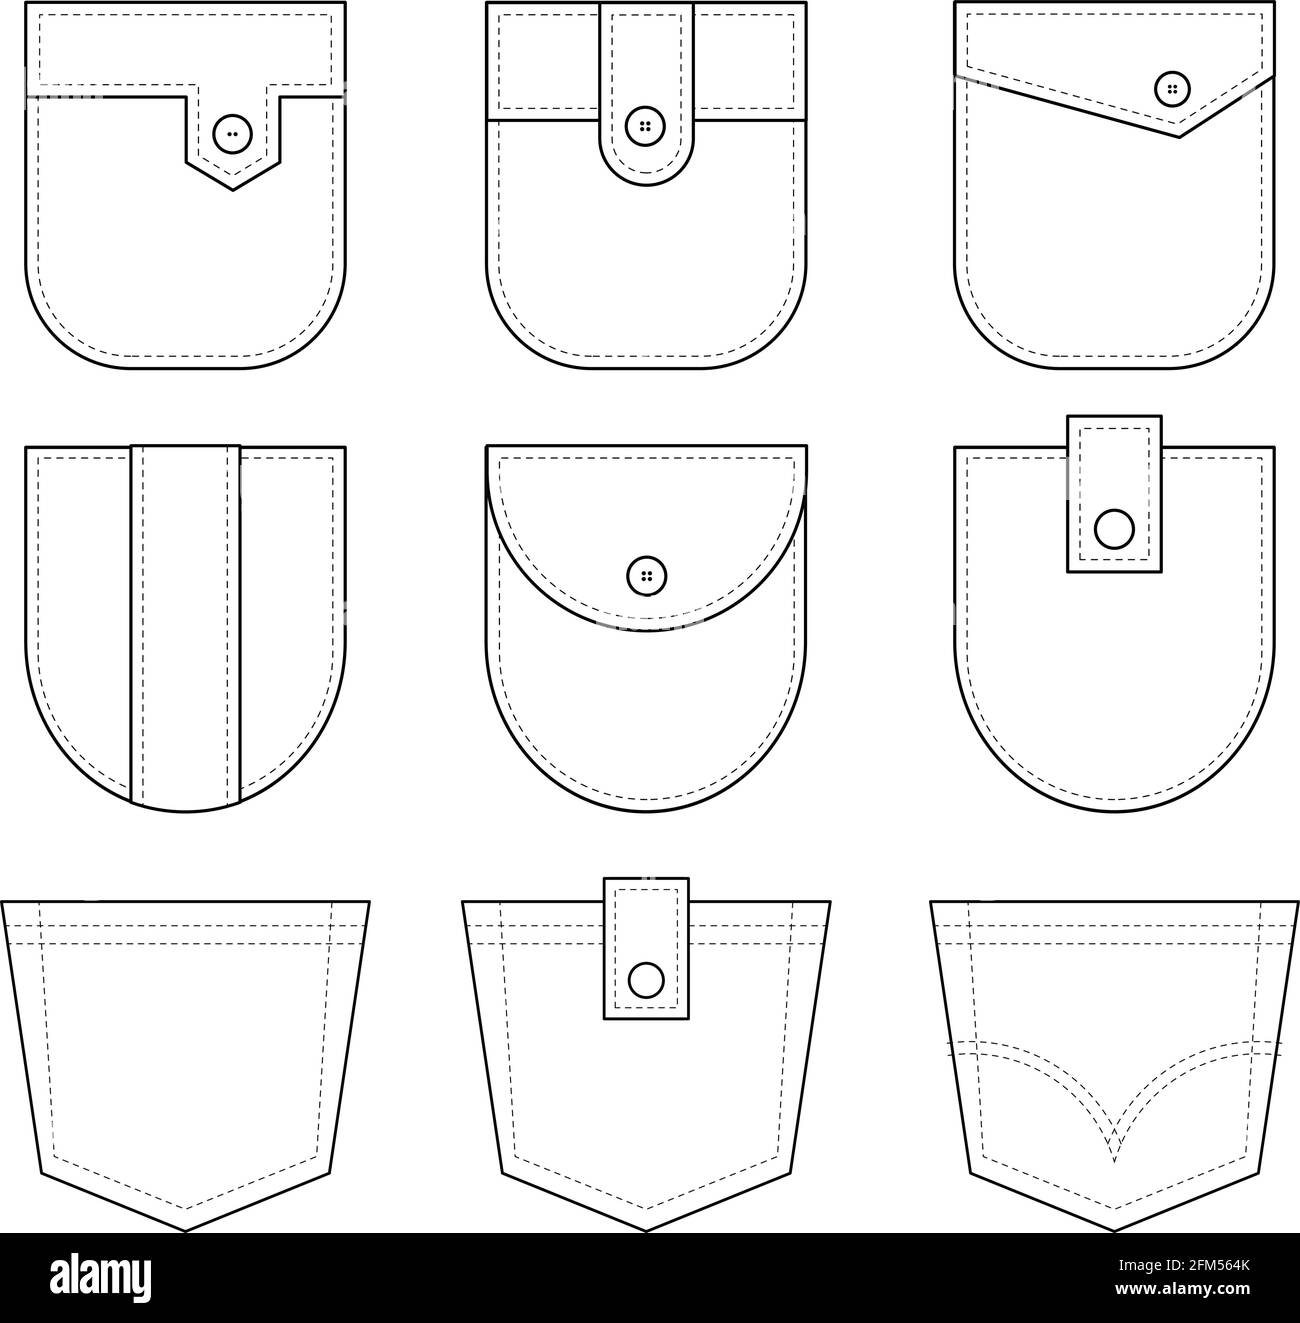 Patch pocket. Set of uniform patch pockets shapes for clothes, dress ...